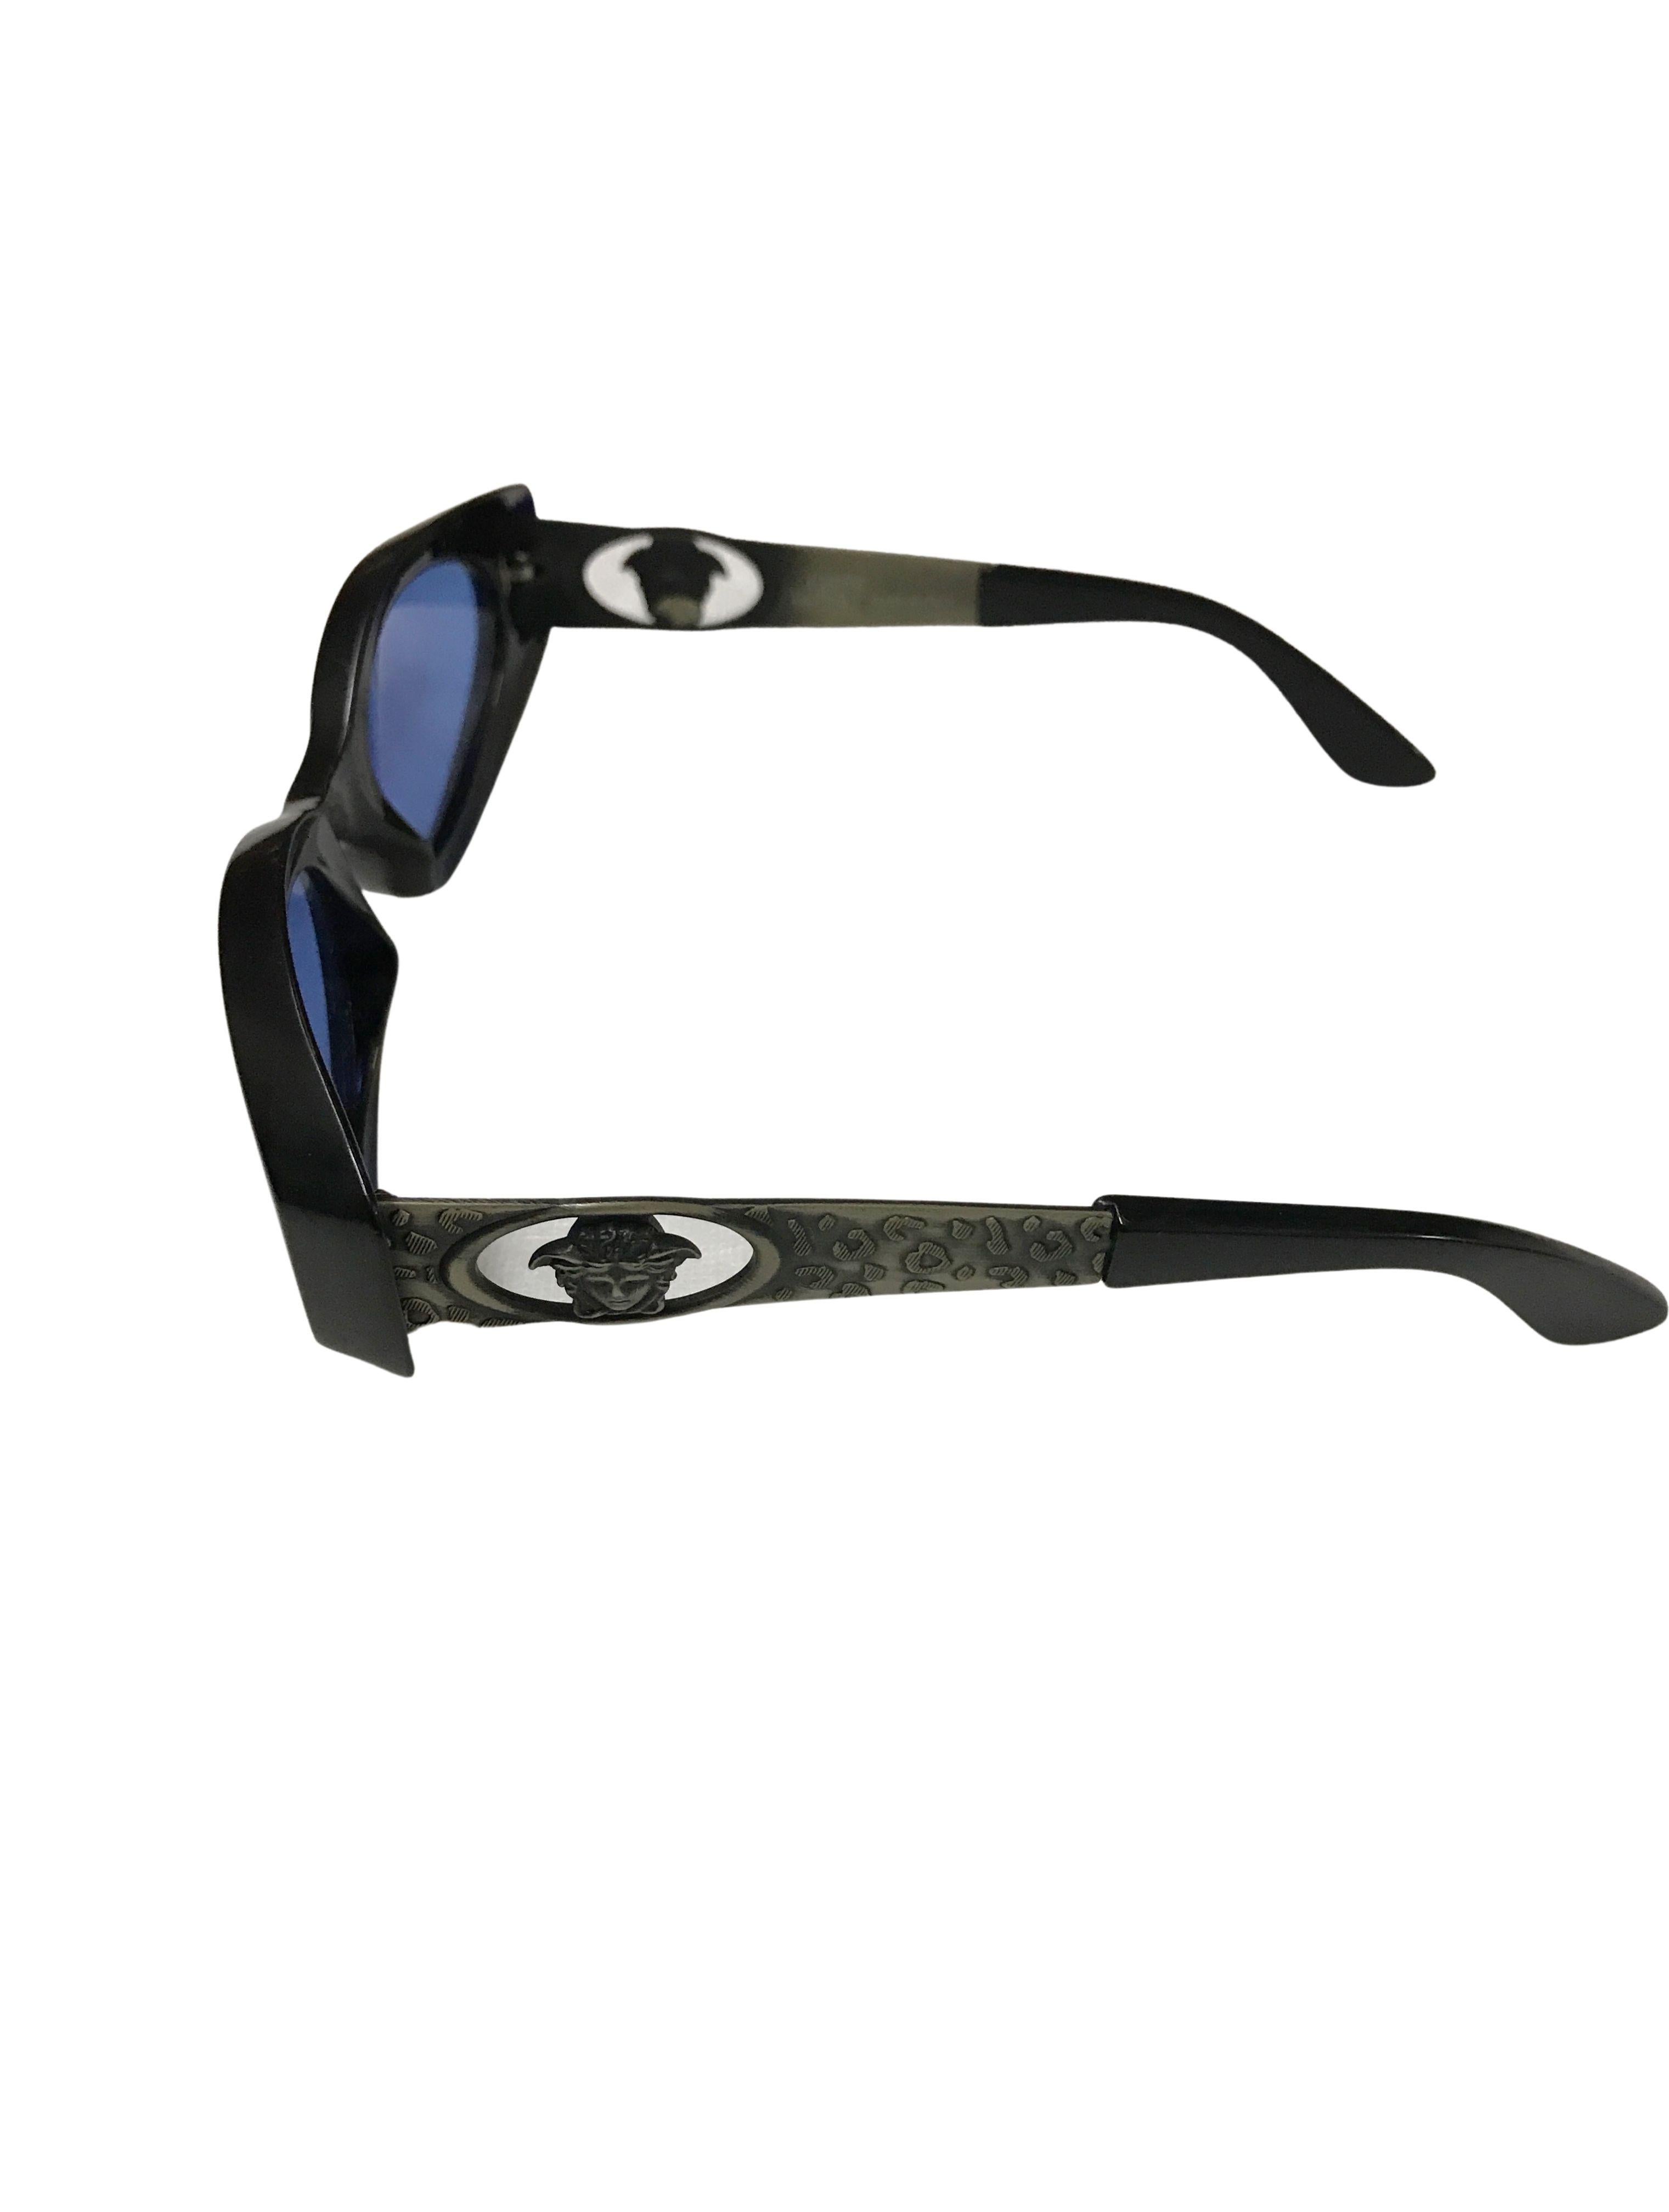 versace leopard sunglasses